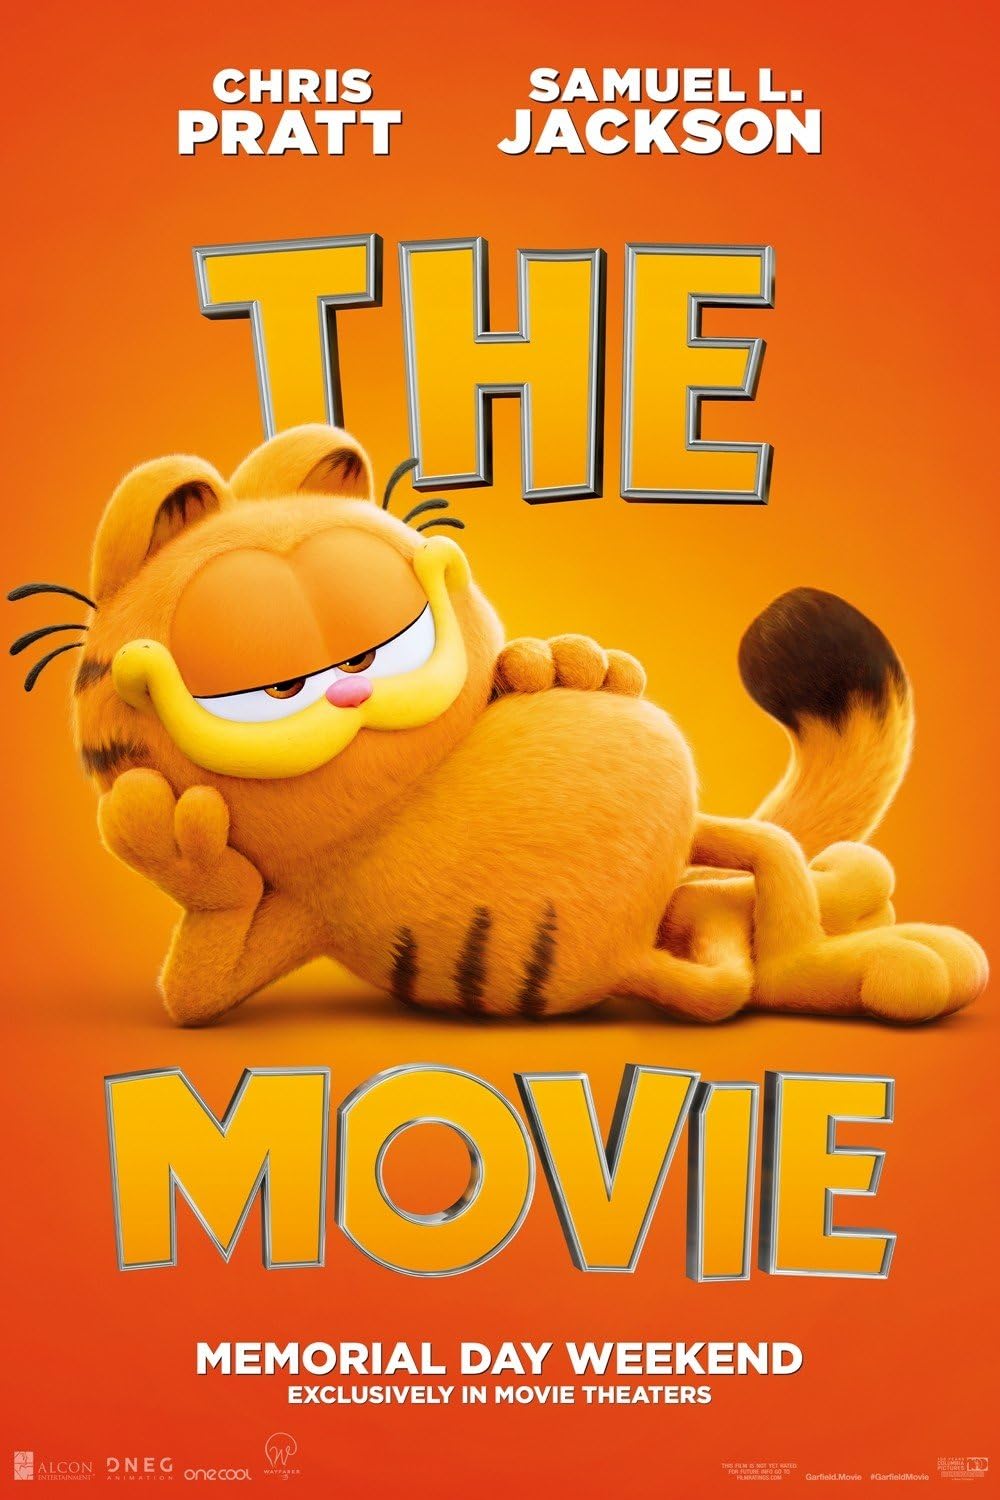 Download The Garfield Movie (2024) Dual Audio {Hindi-English} Movie CAMRiP || 1080p [4GB]